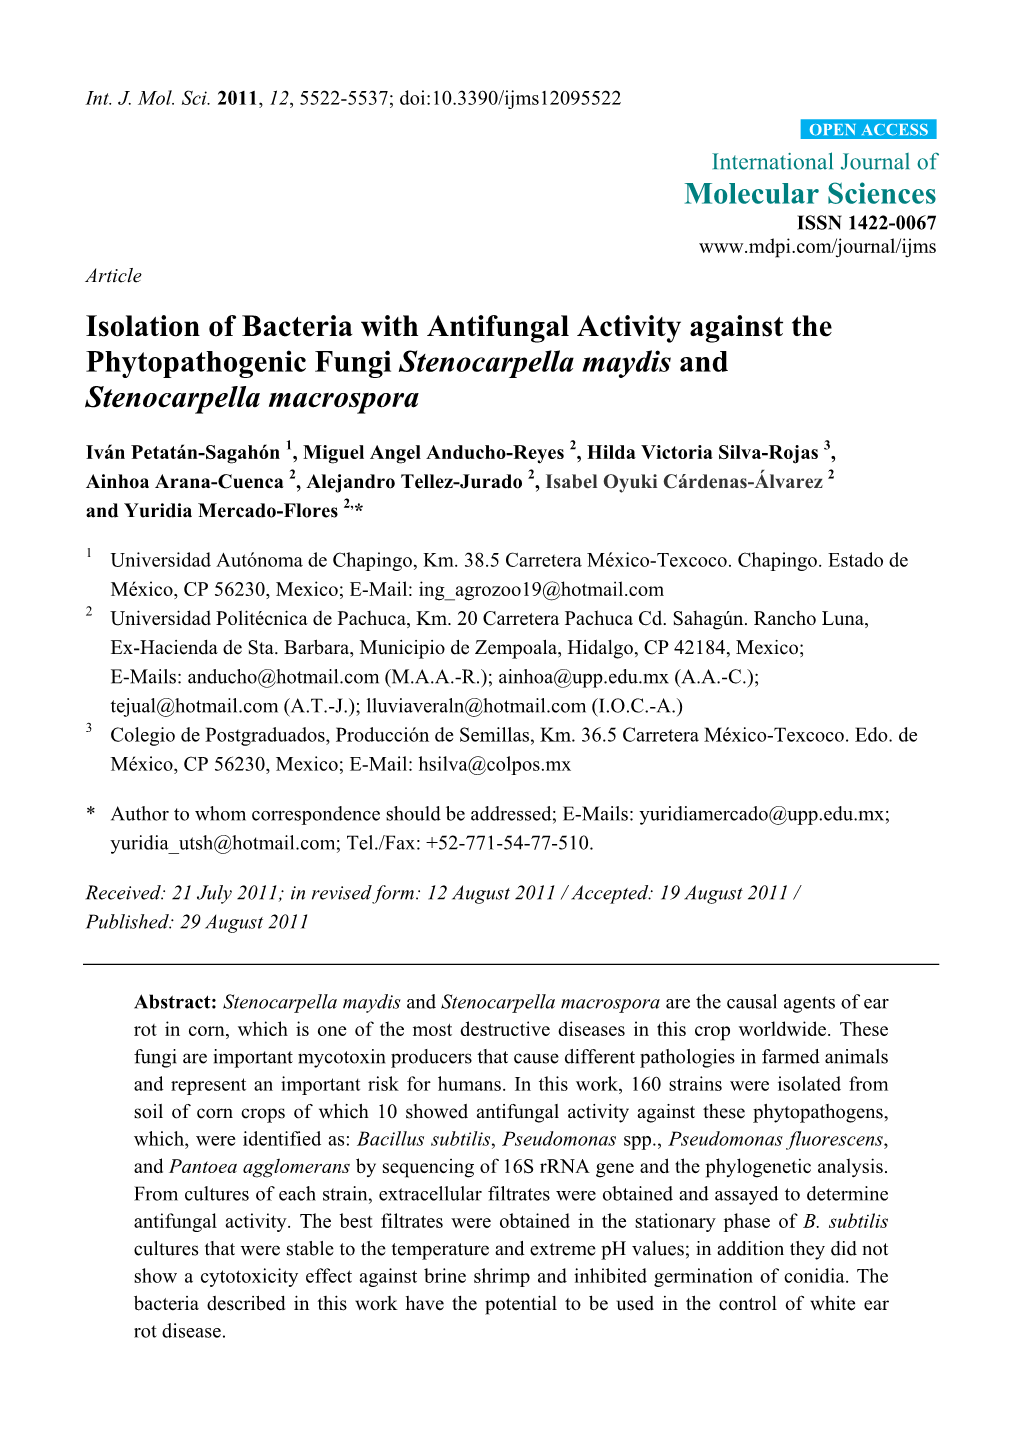 Isolation of Bacteria with Antifungal Activity Against the Phytopathogenic Fungi Stenocarpella Maydis and Stenocarpella Macrospora